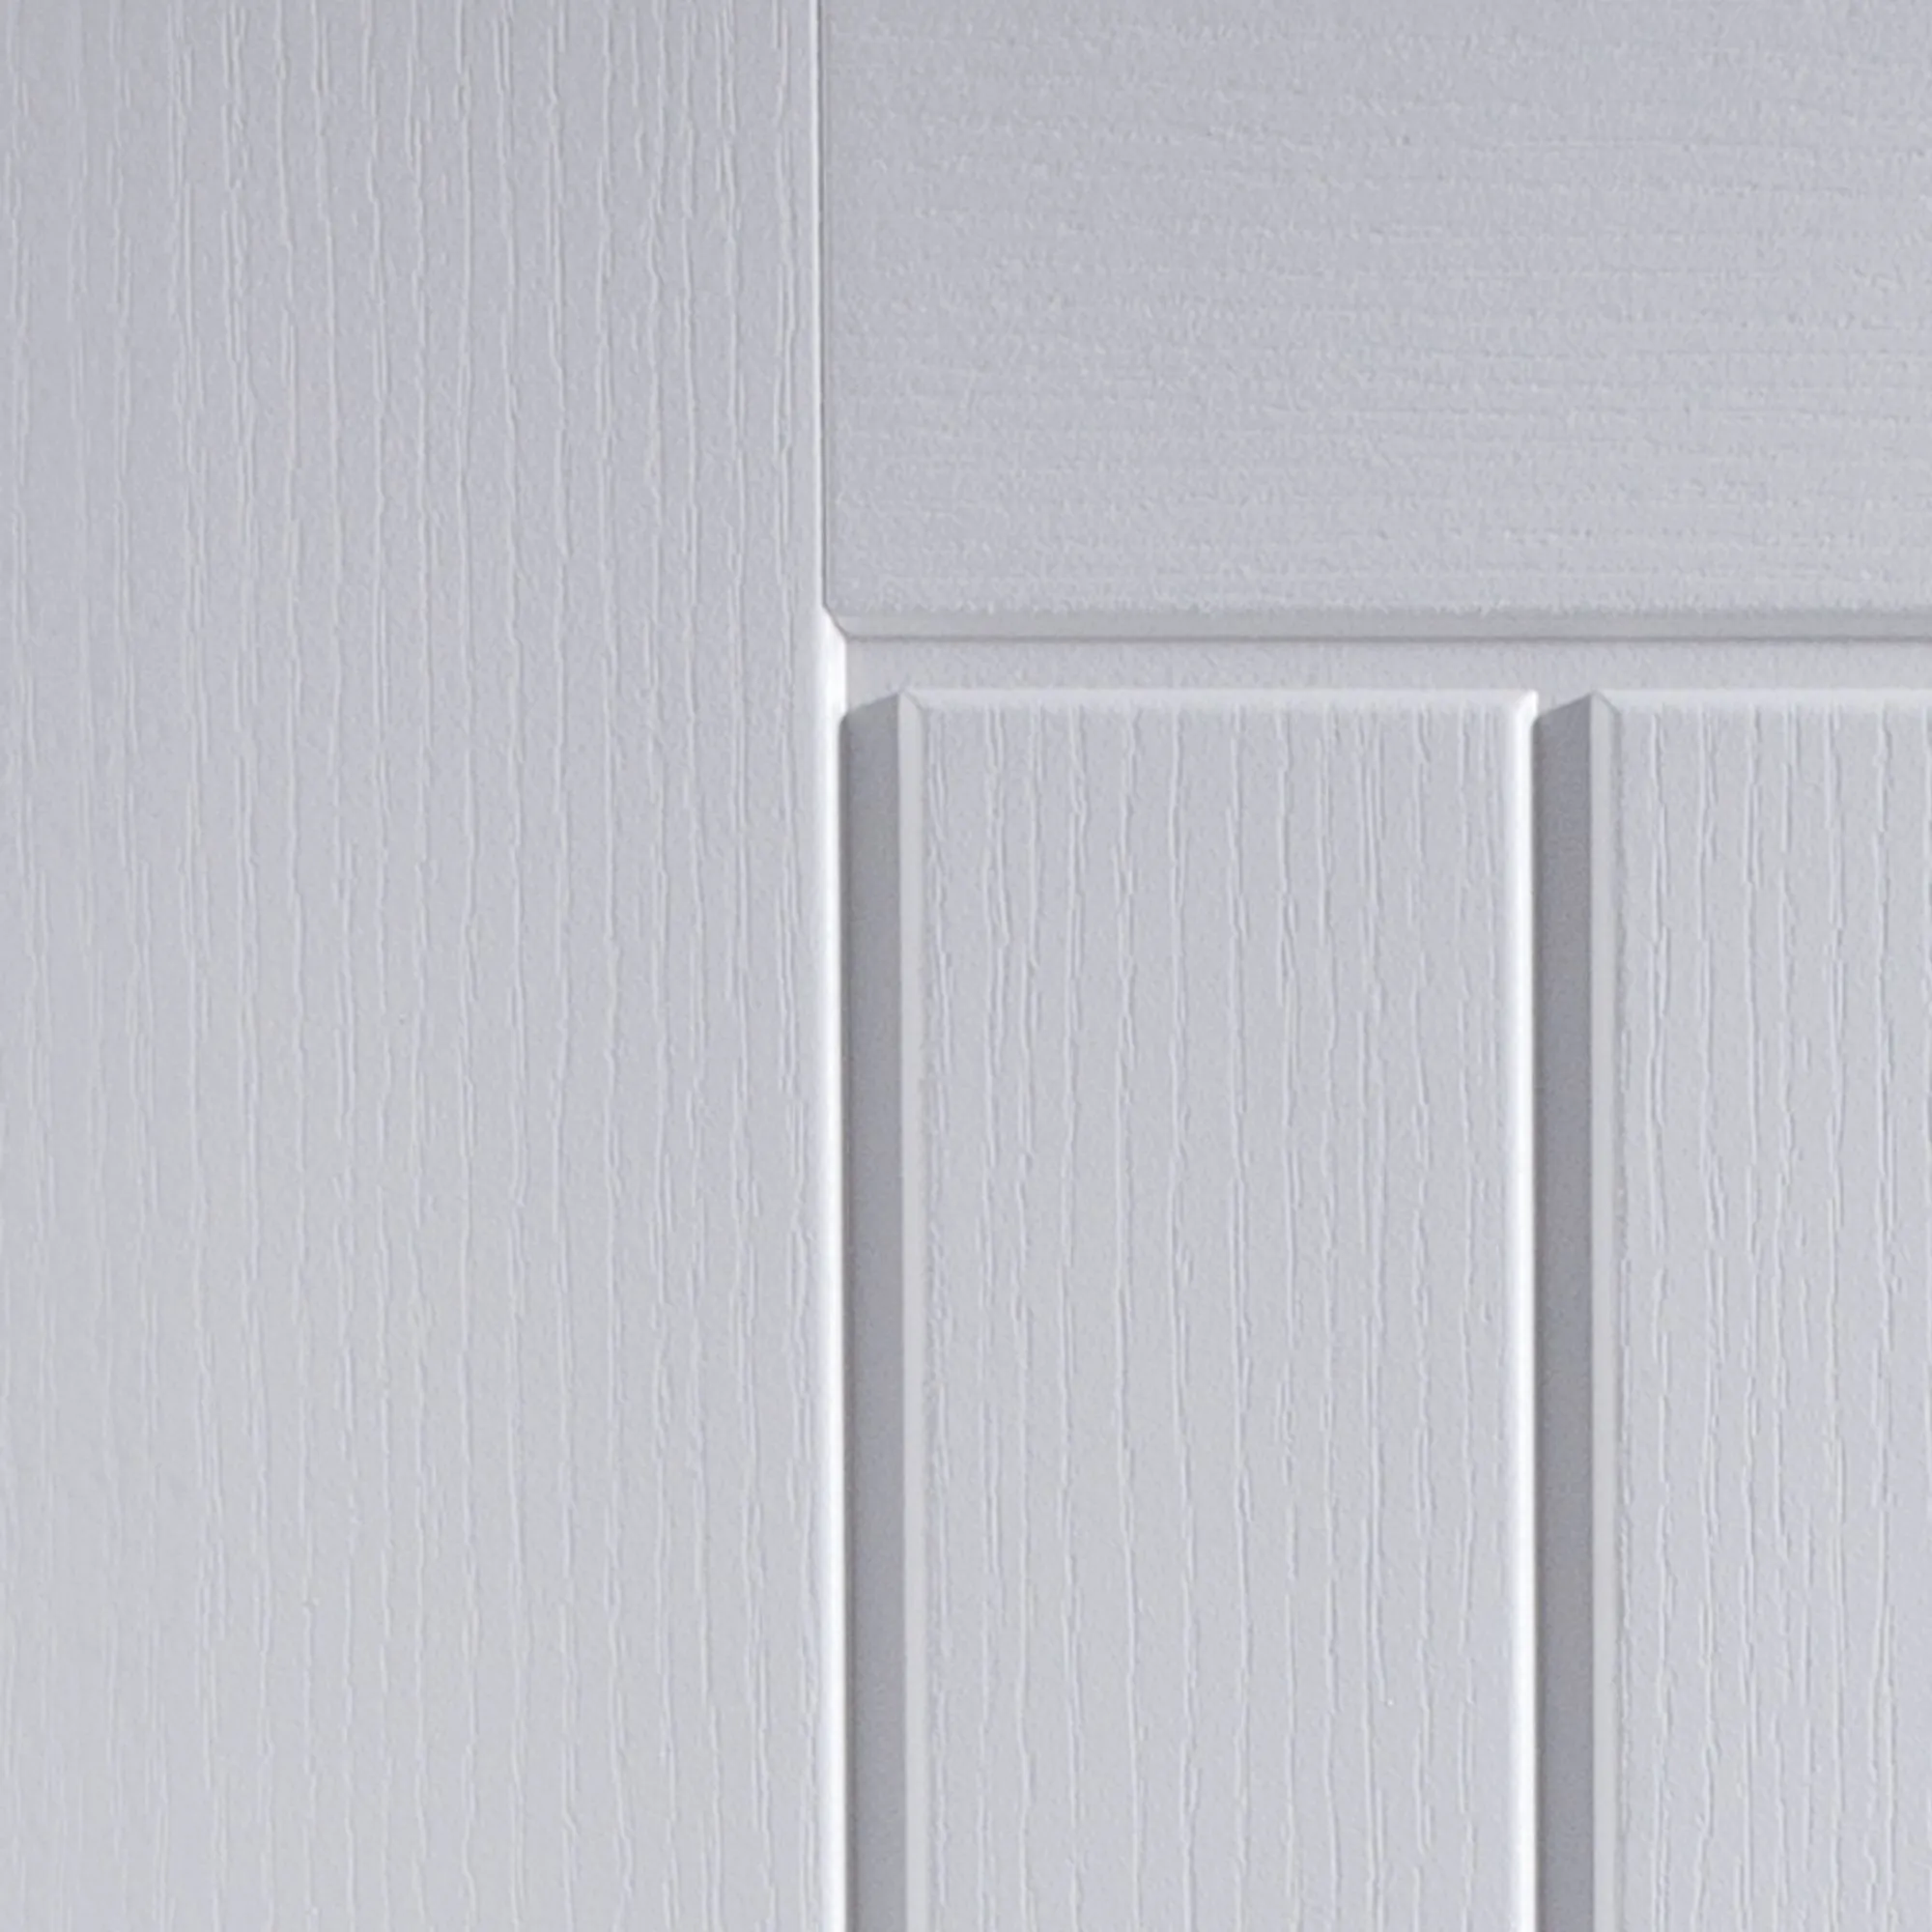 Cottage White Woodgrain effect Internal Panel Door, (H)1981mm (W)838mm (T)35mm